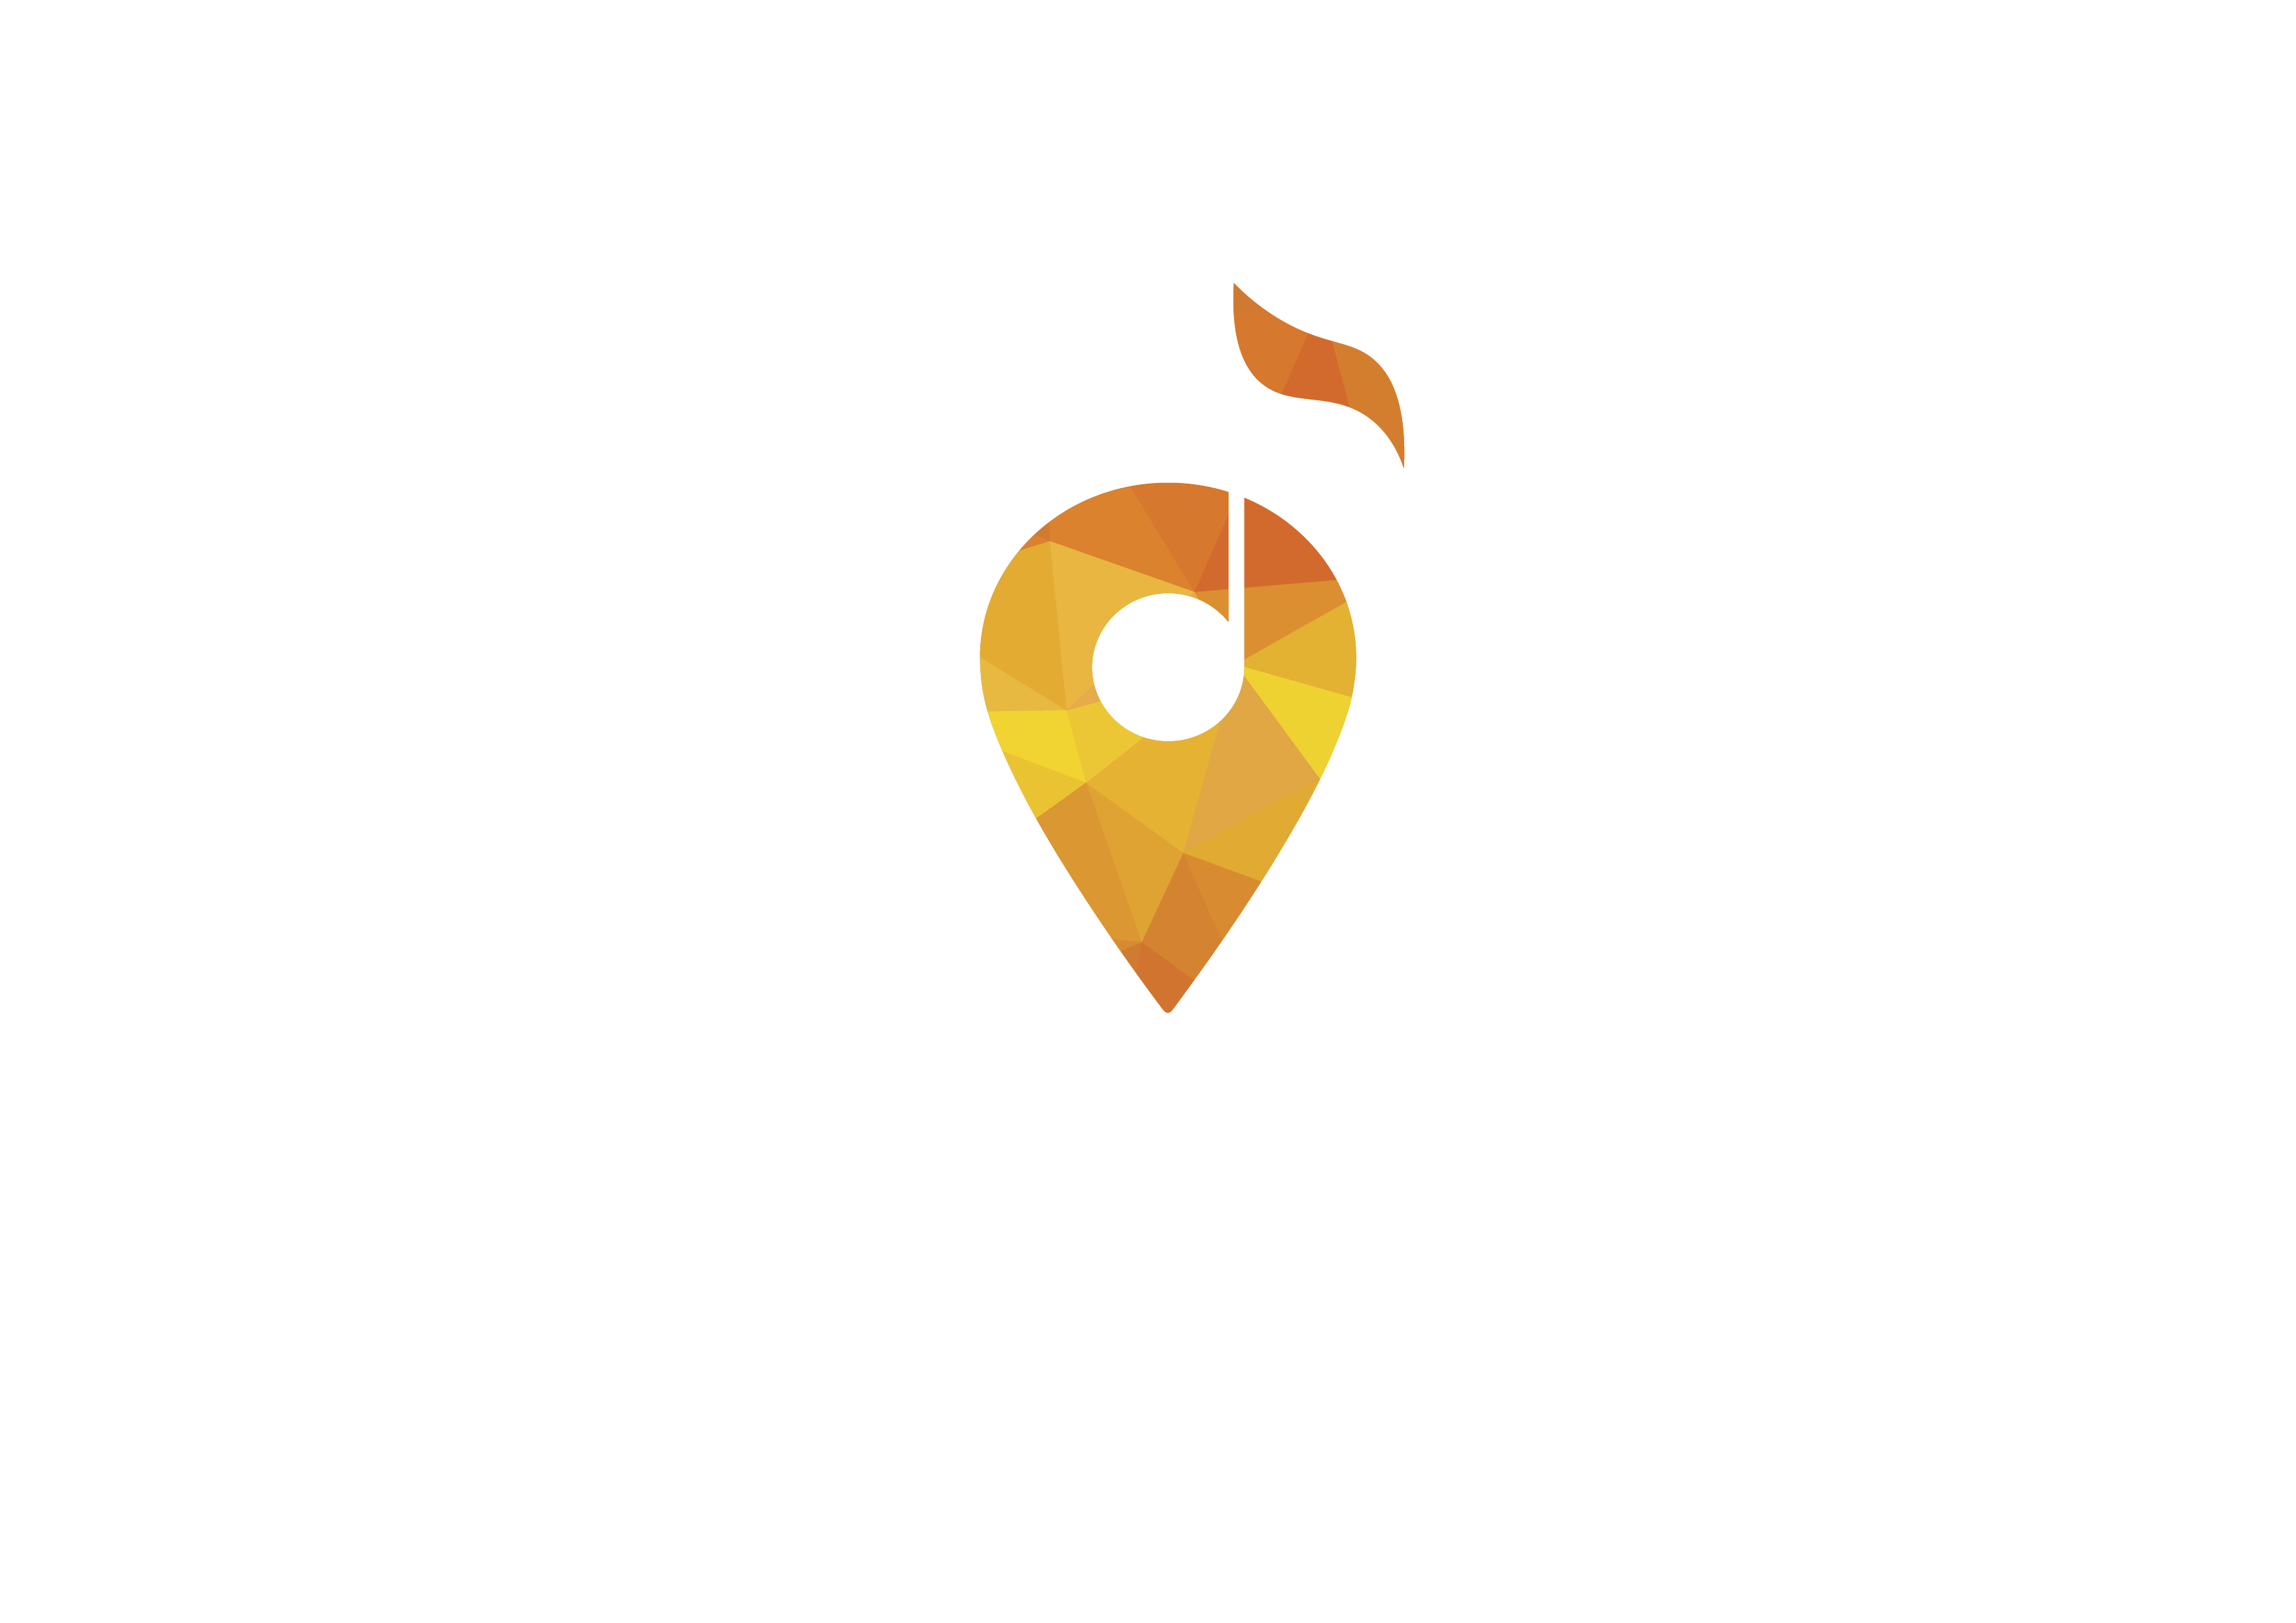 ncma RGB reversed logo w date.jpg